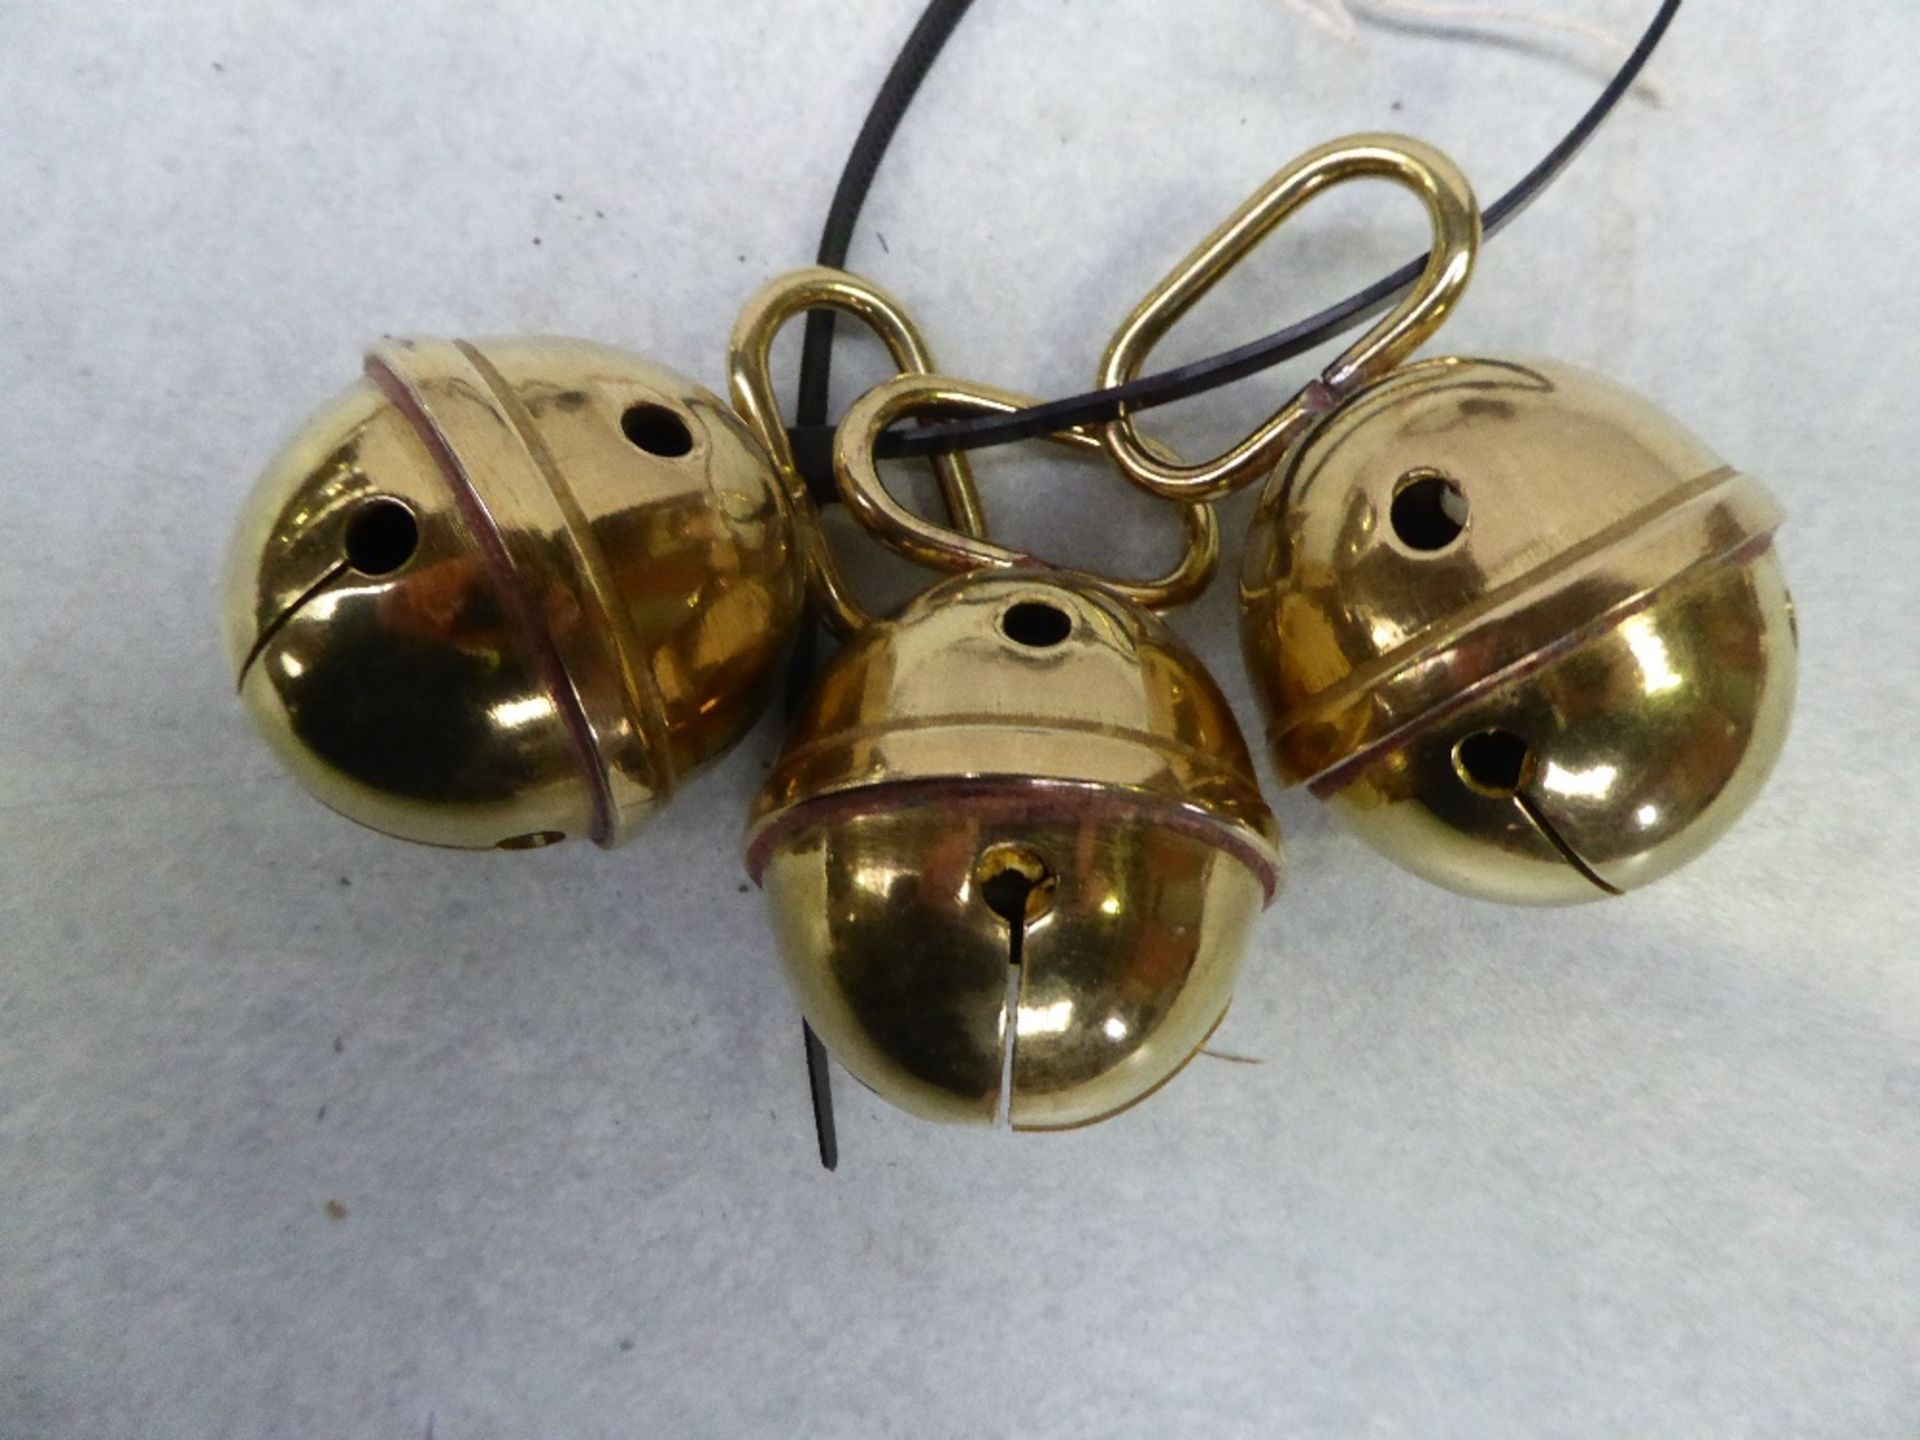 3 round harness bells - carries VAT.